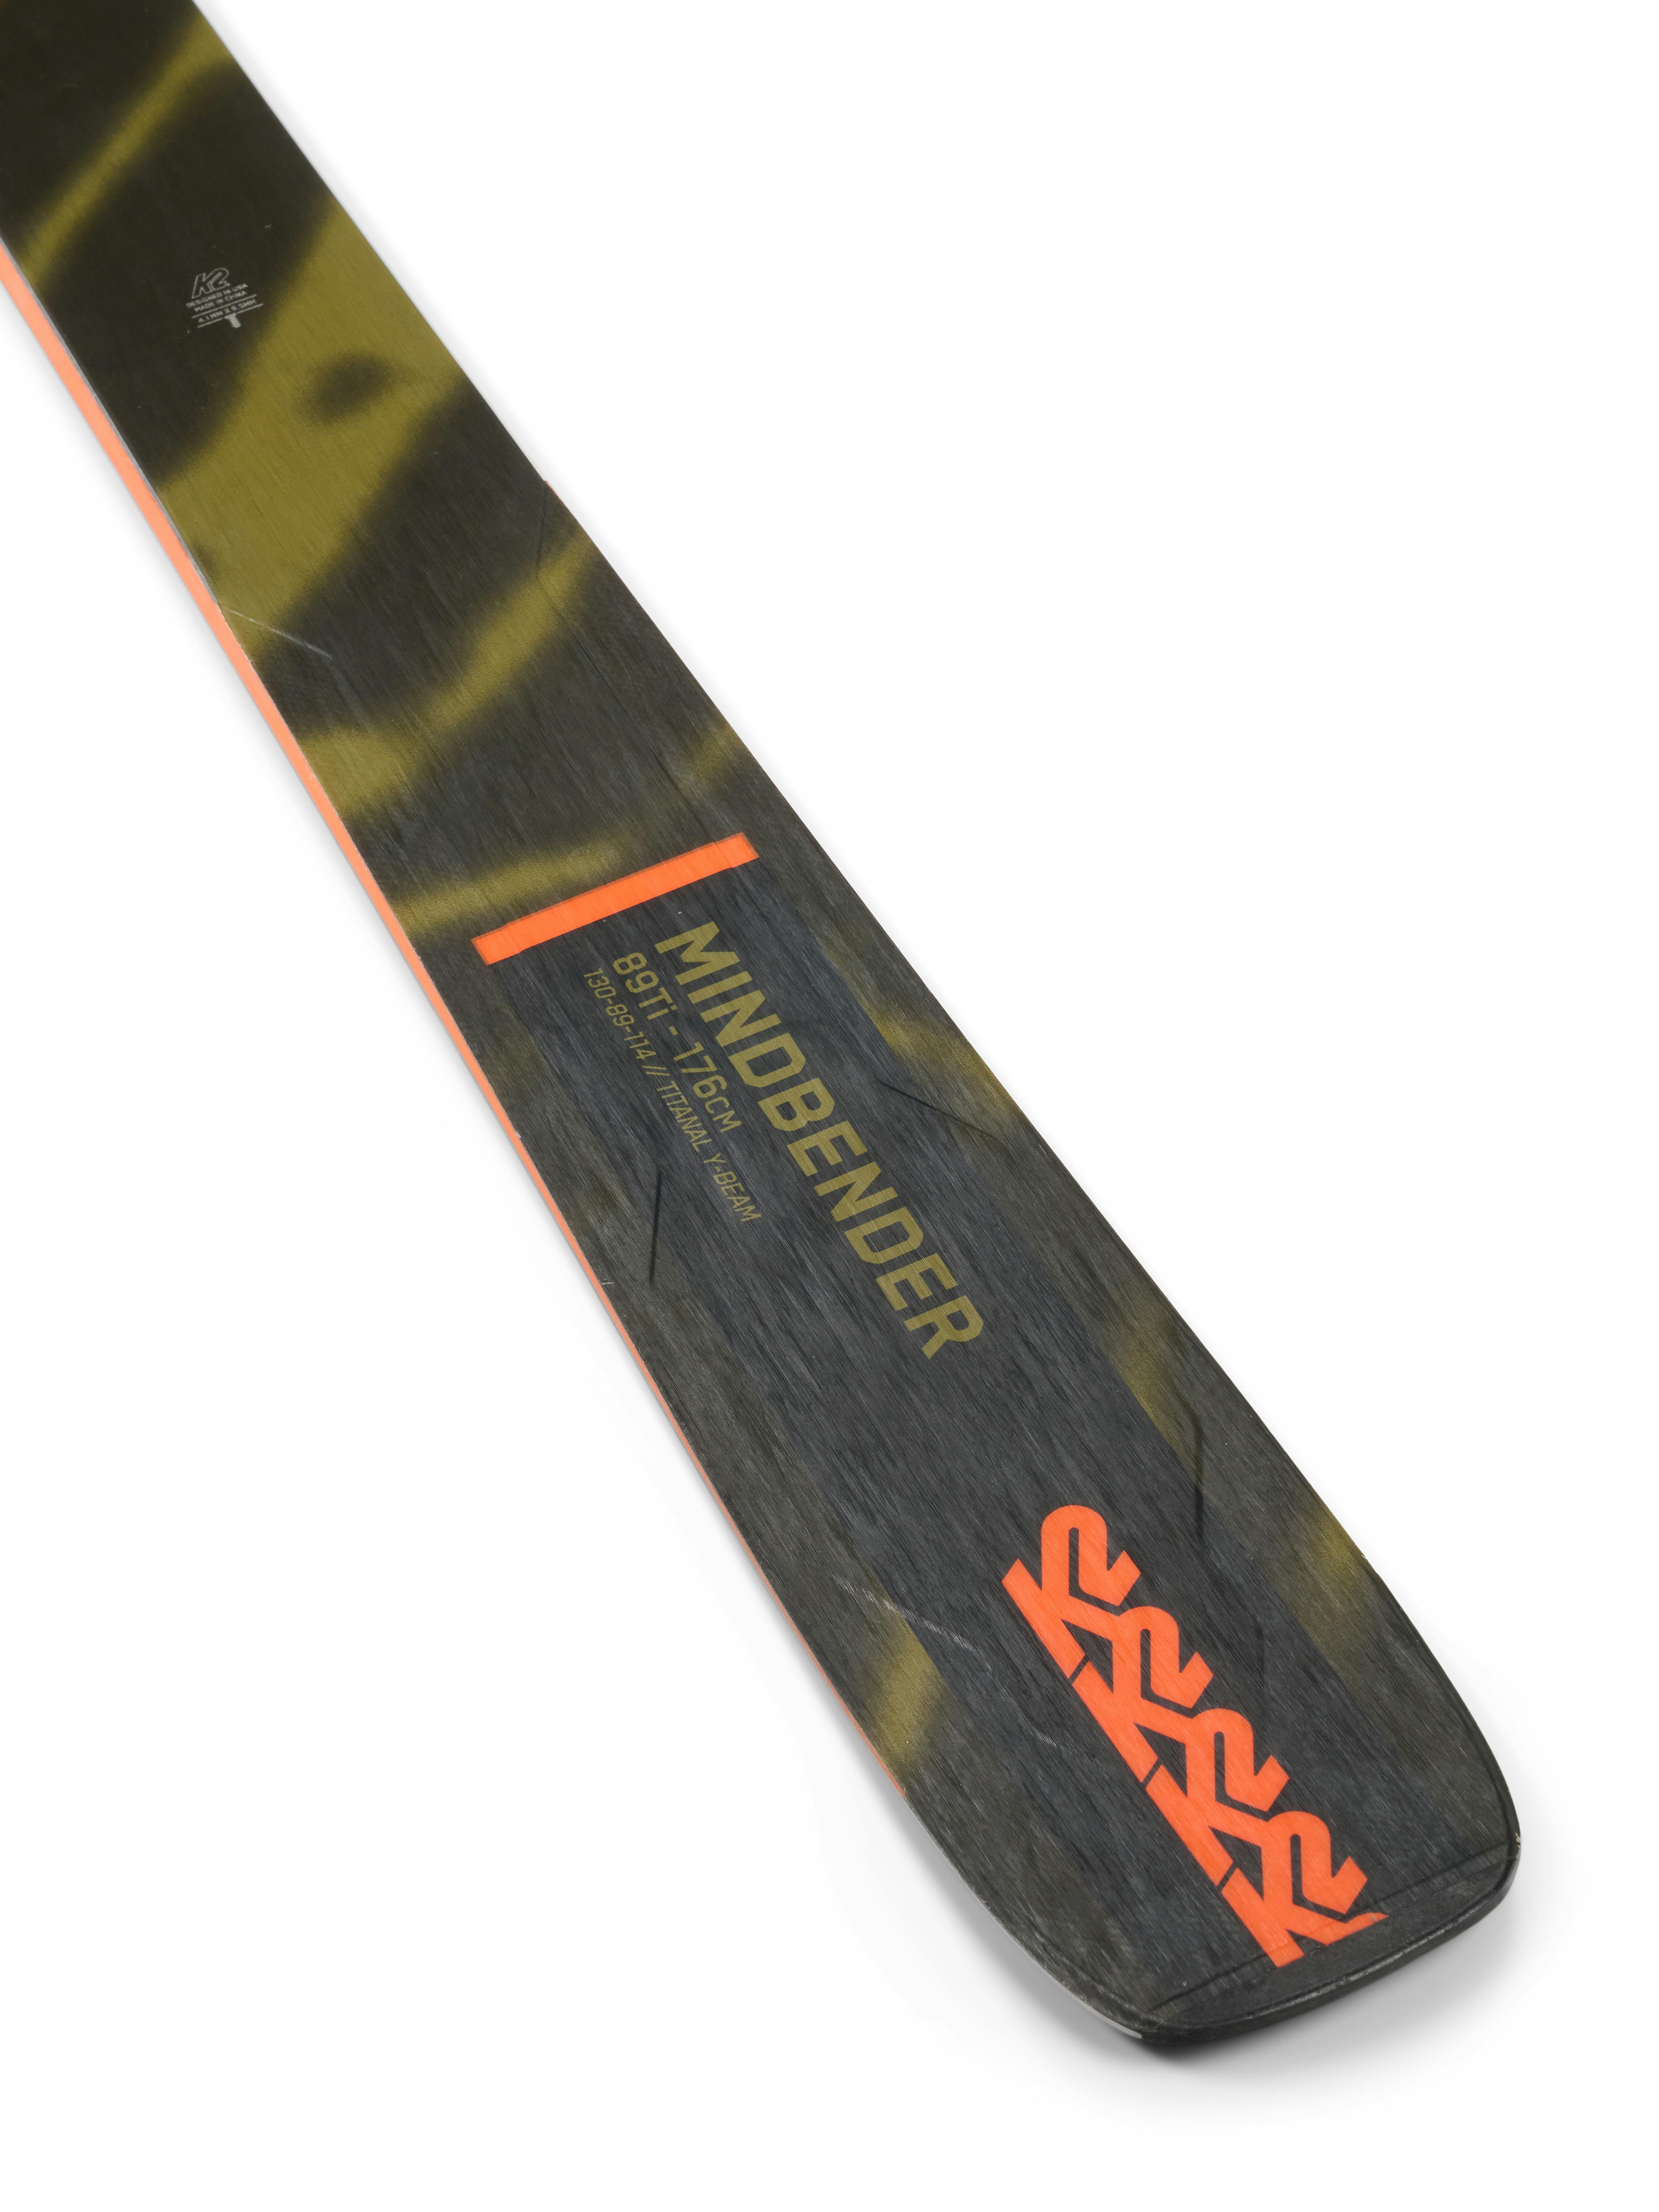 K2 Mindbender 89Ti Skis · 2023 · 182 cm